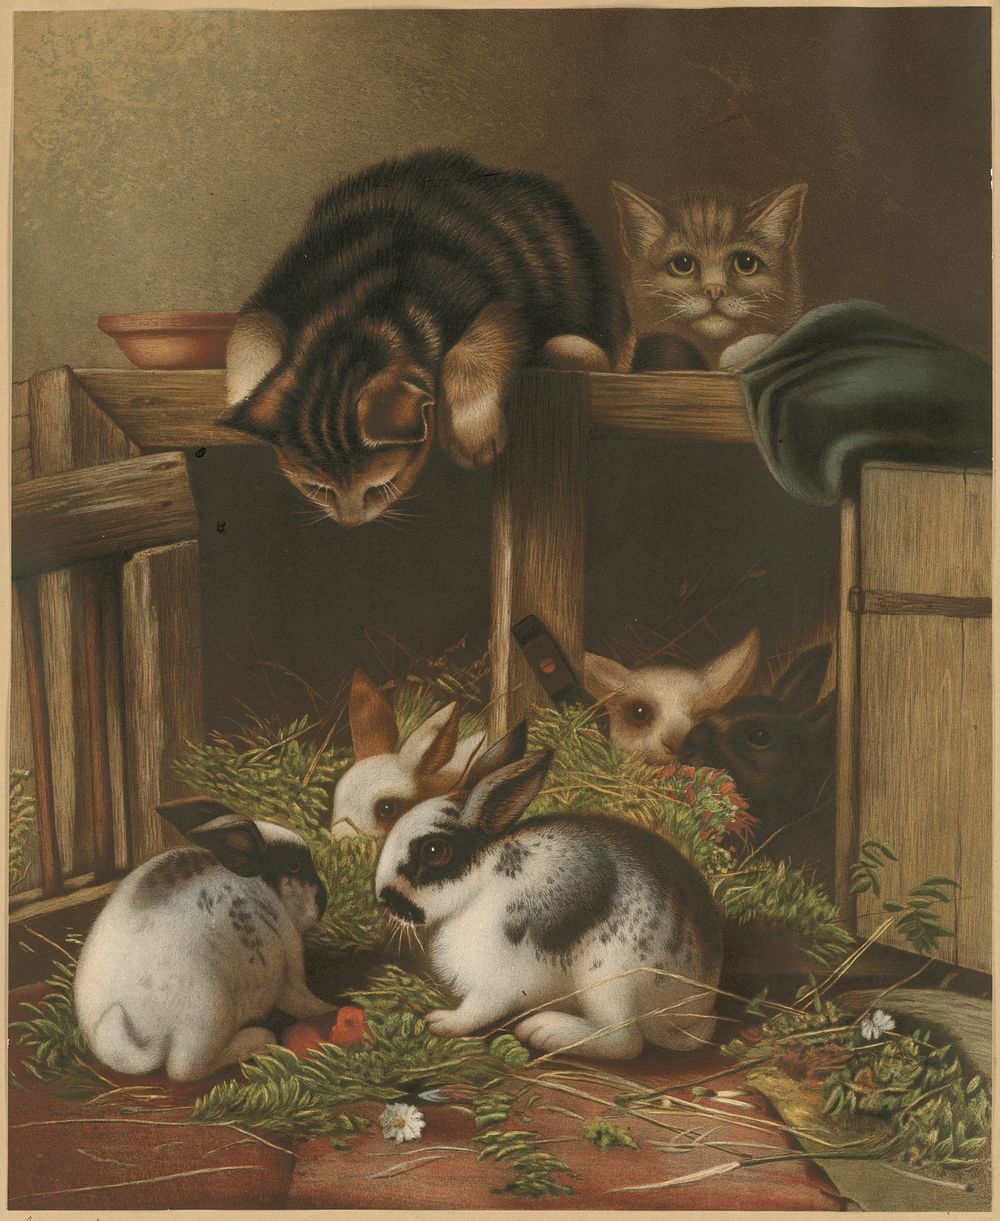             Rabbits and cats          